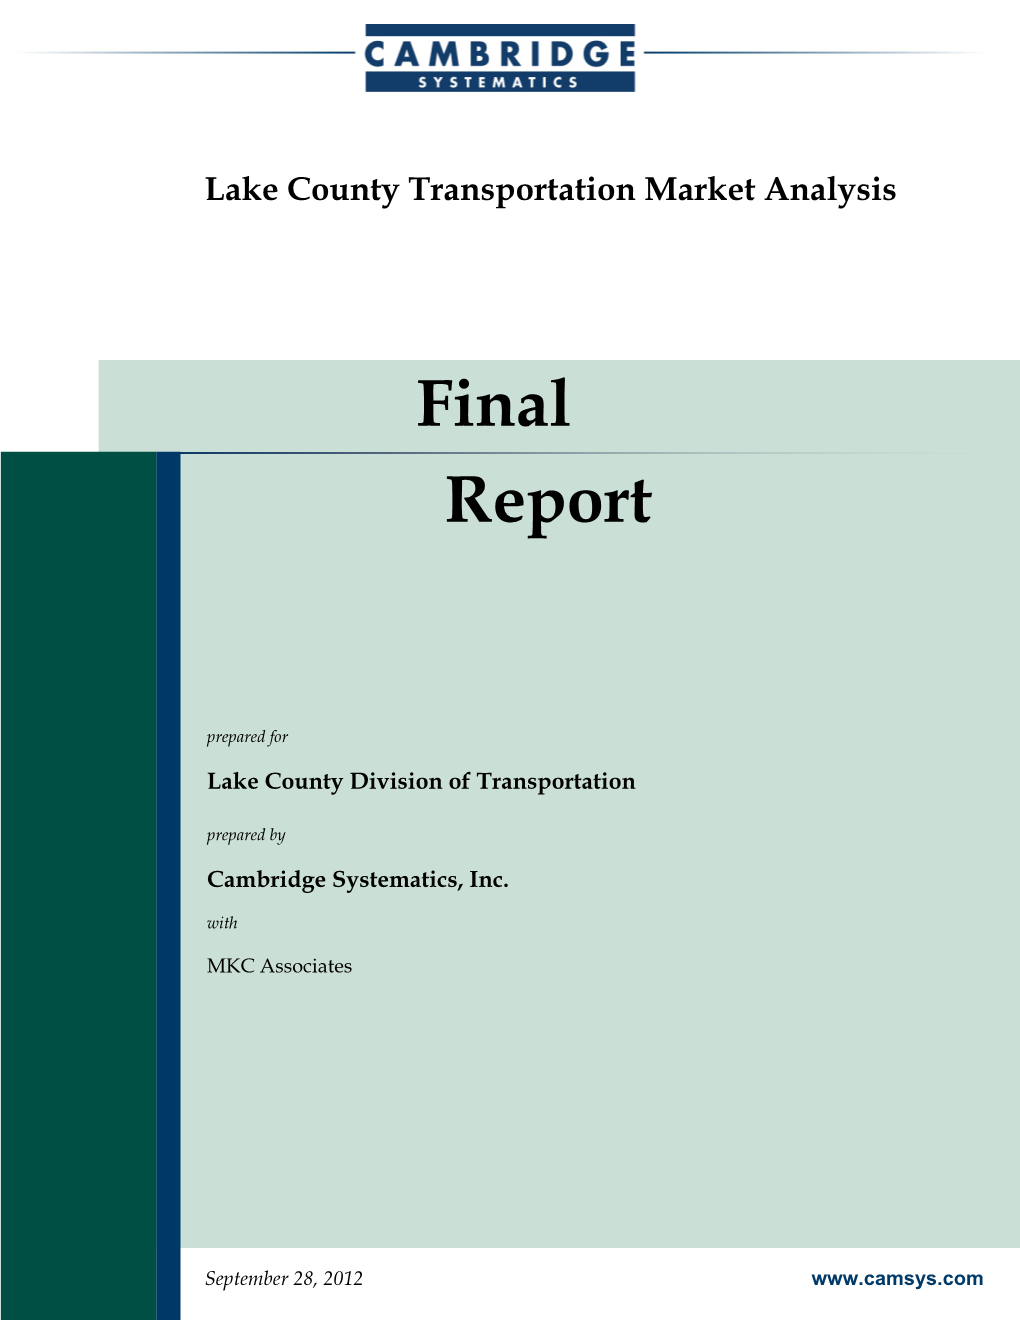 Final Report Lake County Transportation Market Analysis